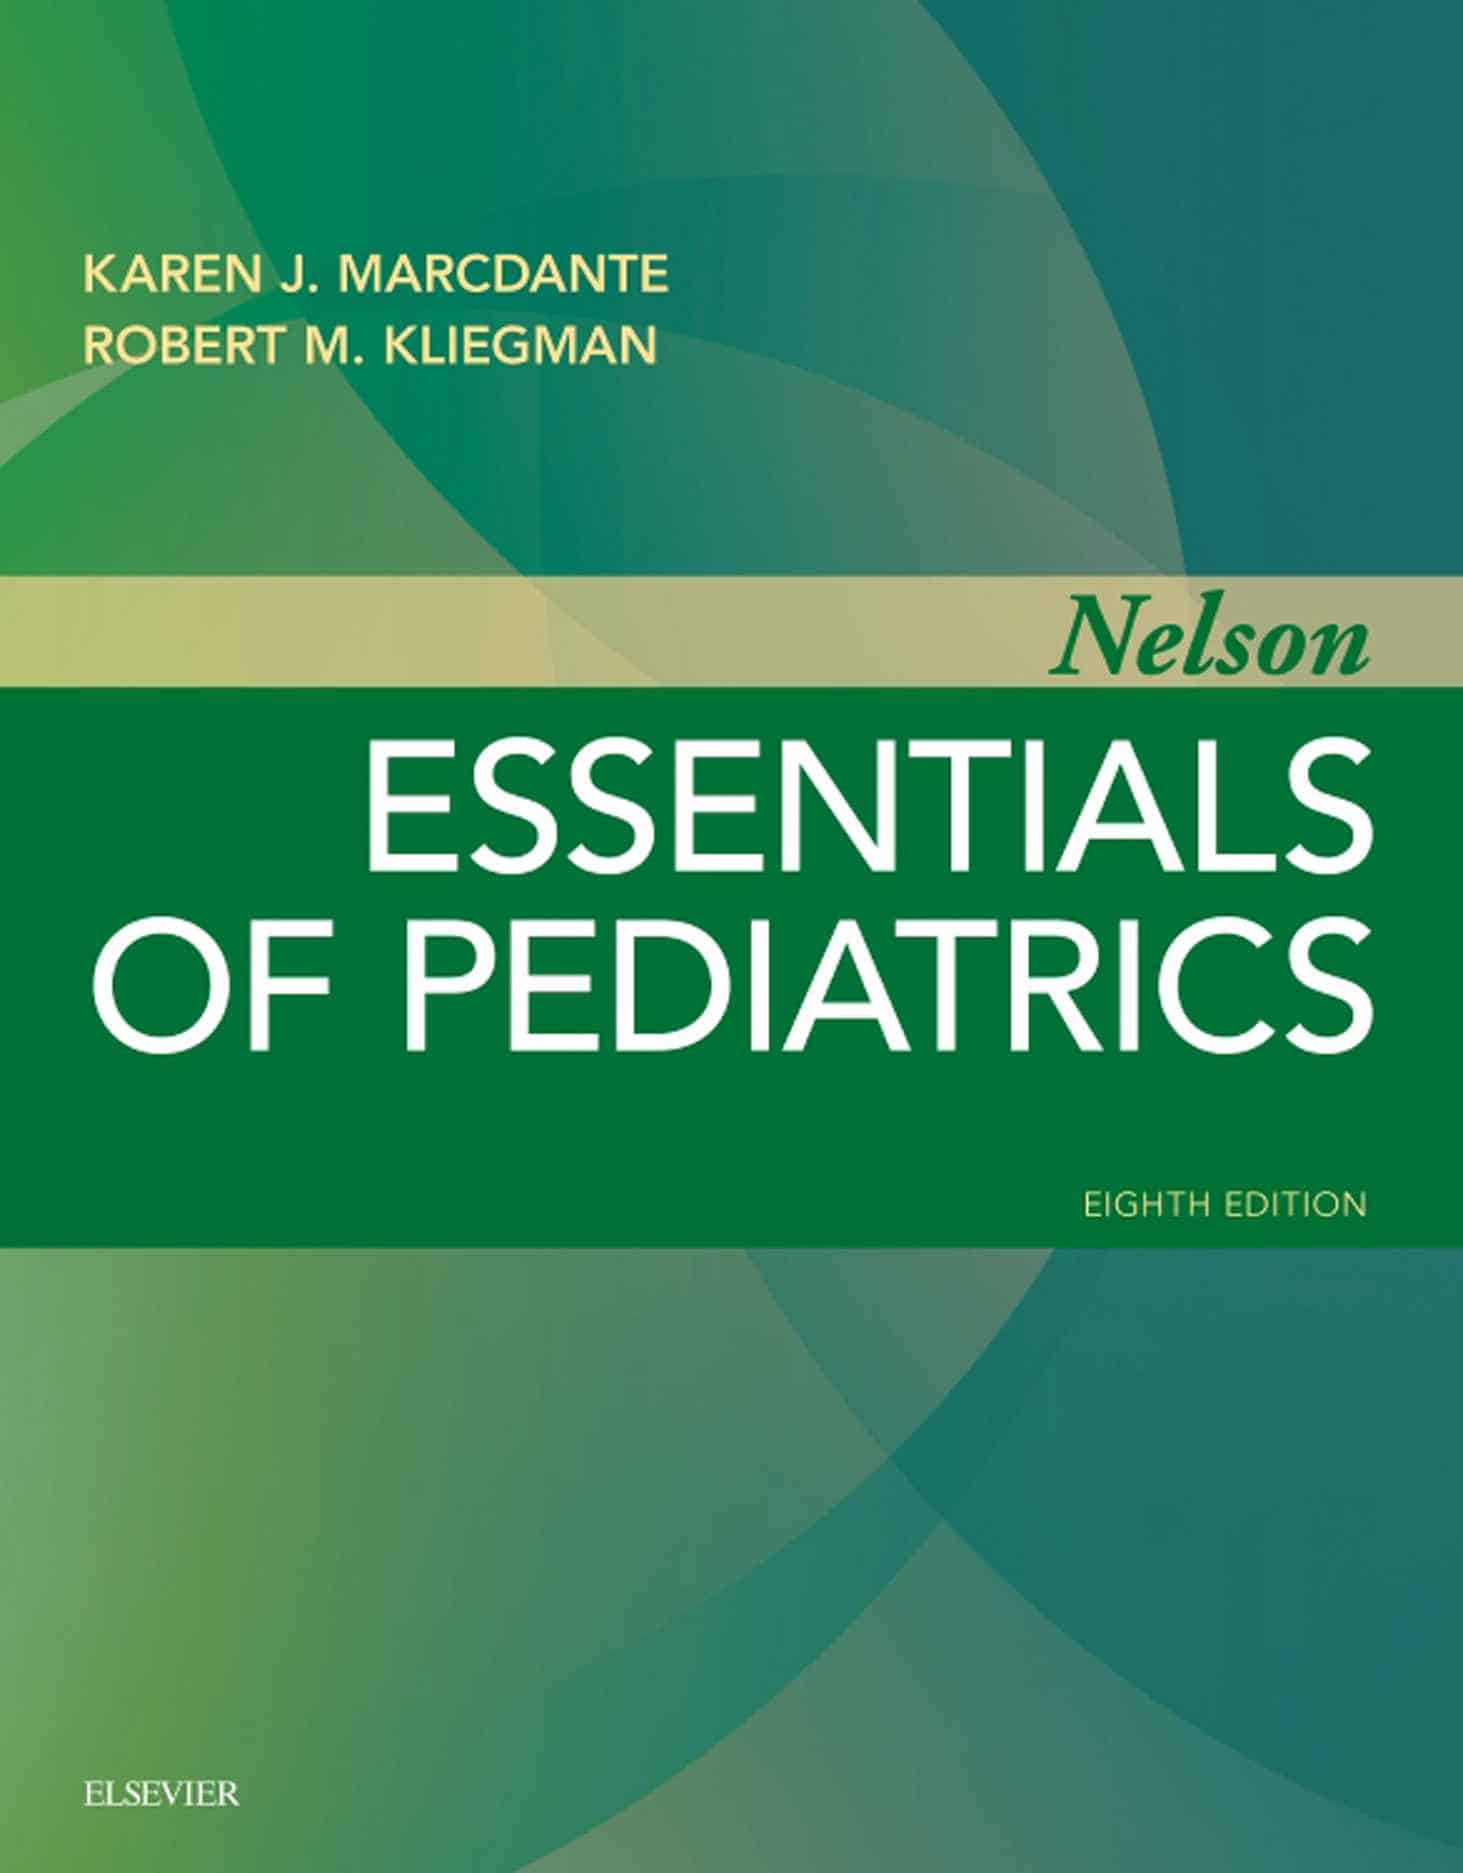 Nelson Essentials of Pediatrics, 8th Edition 2018